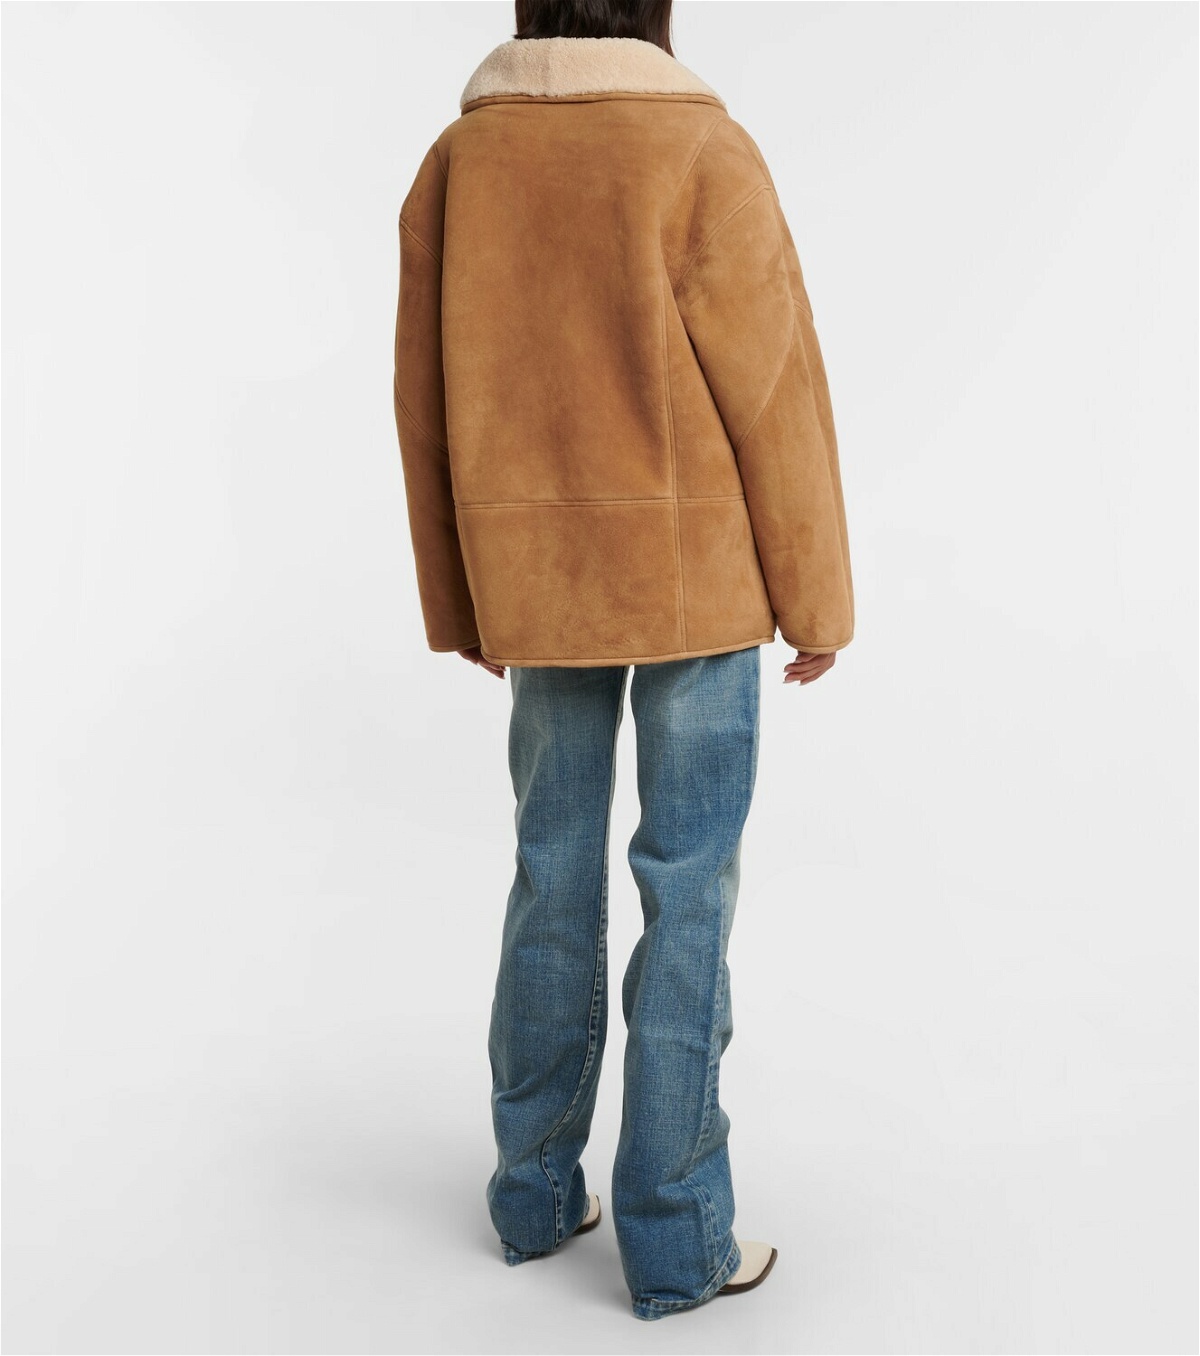 Blazé Milano Tatoosh shearling-lined suede jacket